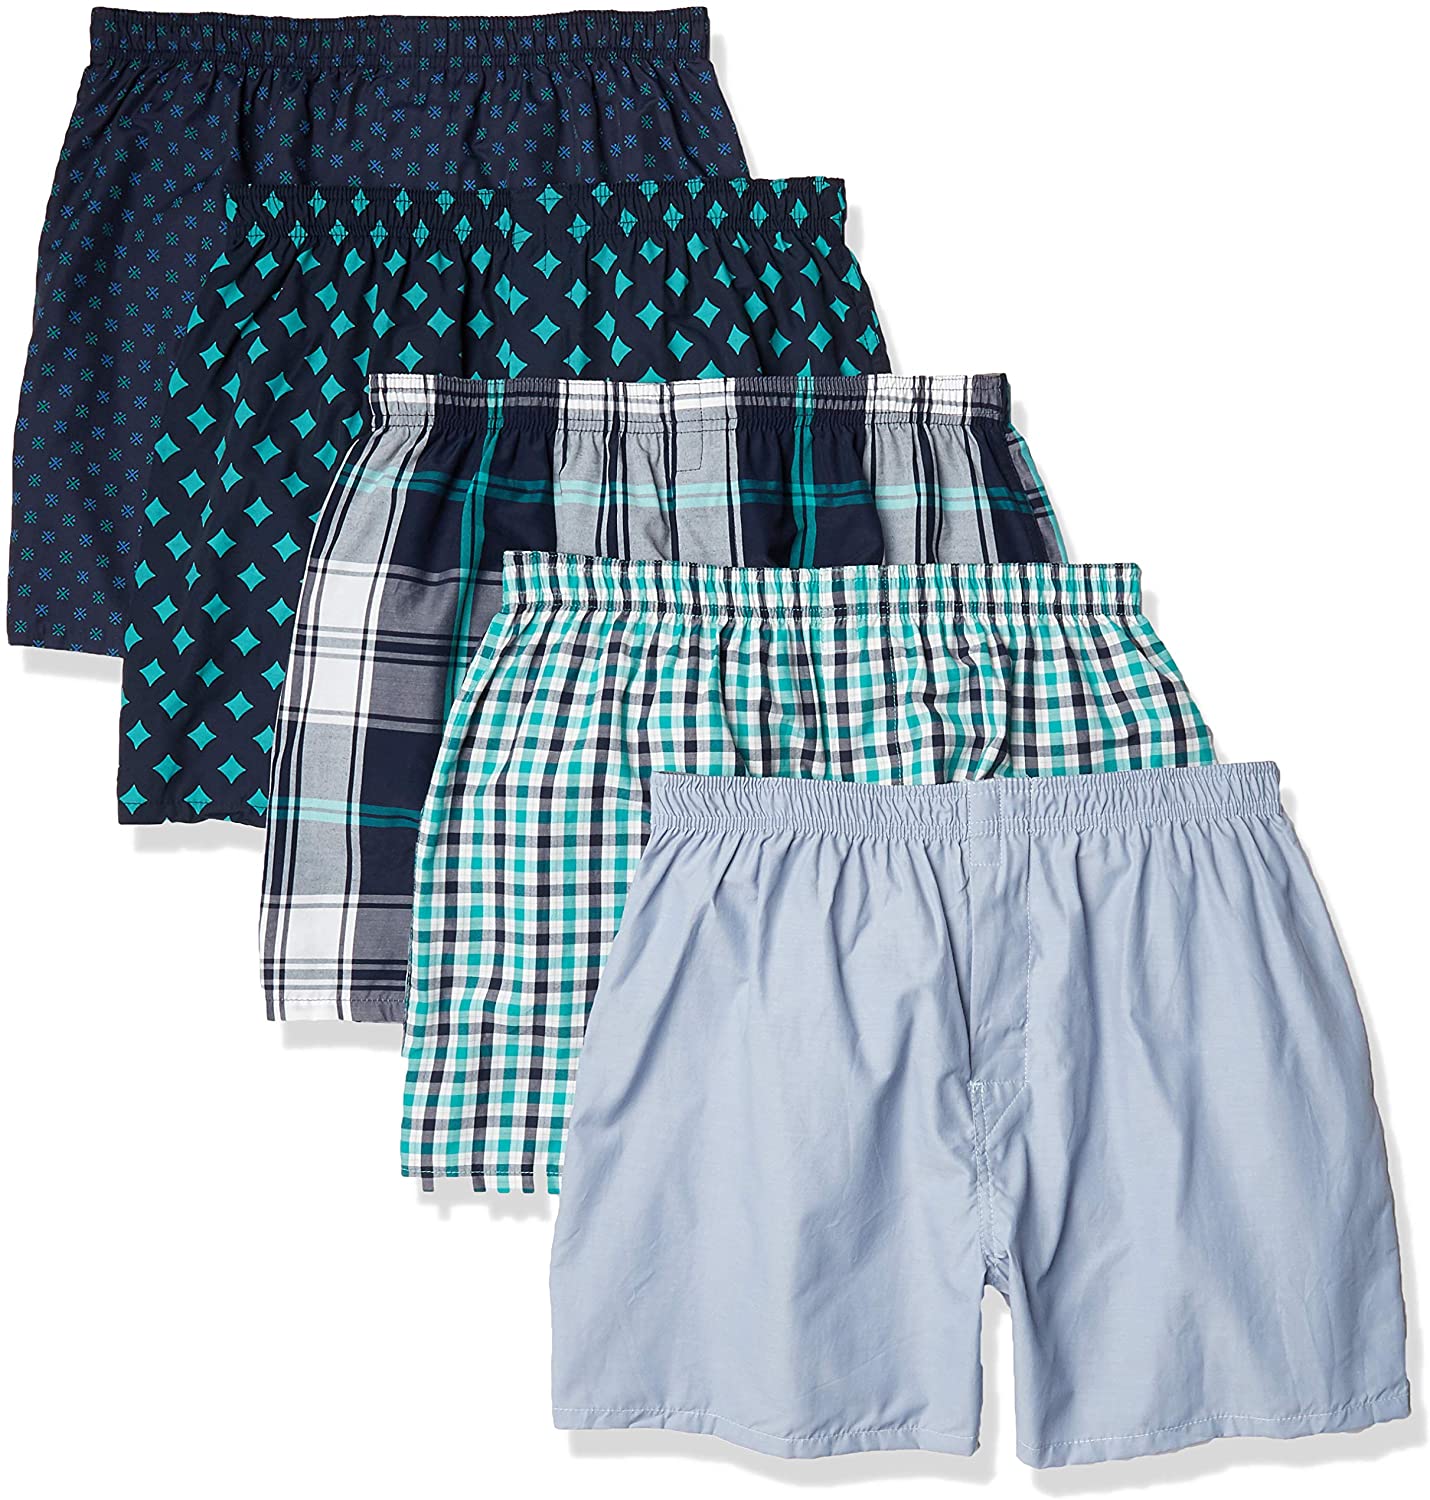 Gildan Men's Underwear Boxer Briefs, Multipack, Mixed Blue (5-Pack), Medium  at  Men's Clothing store